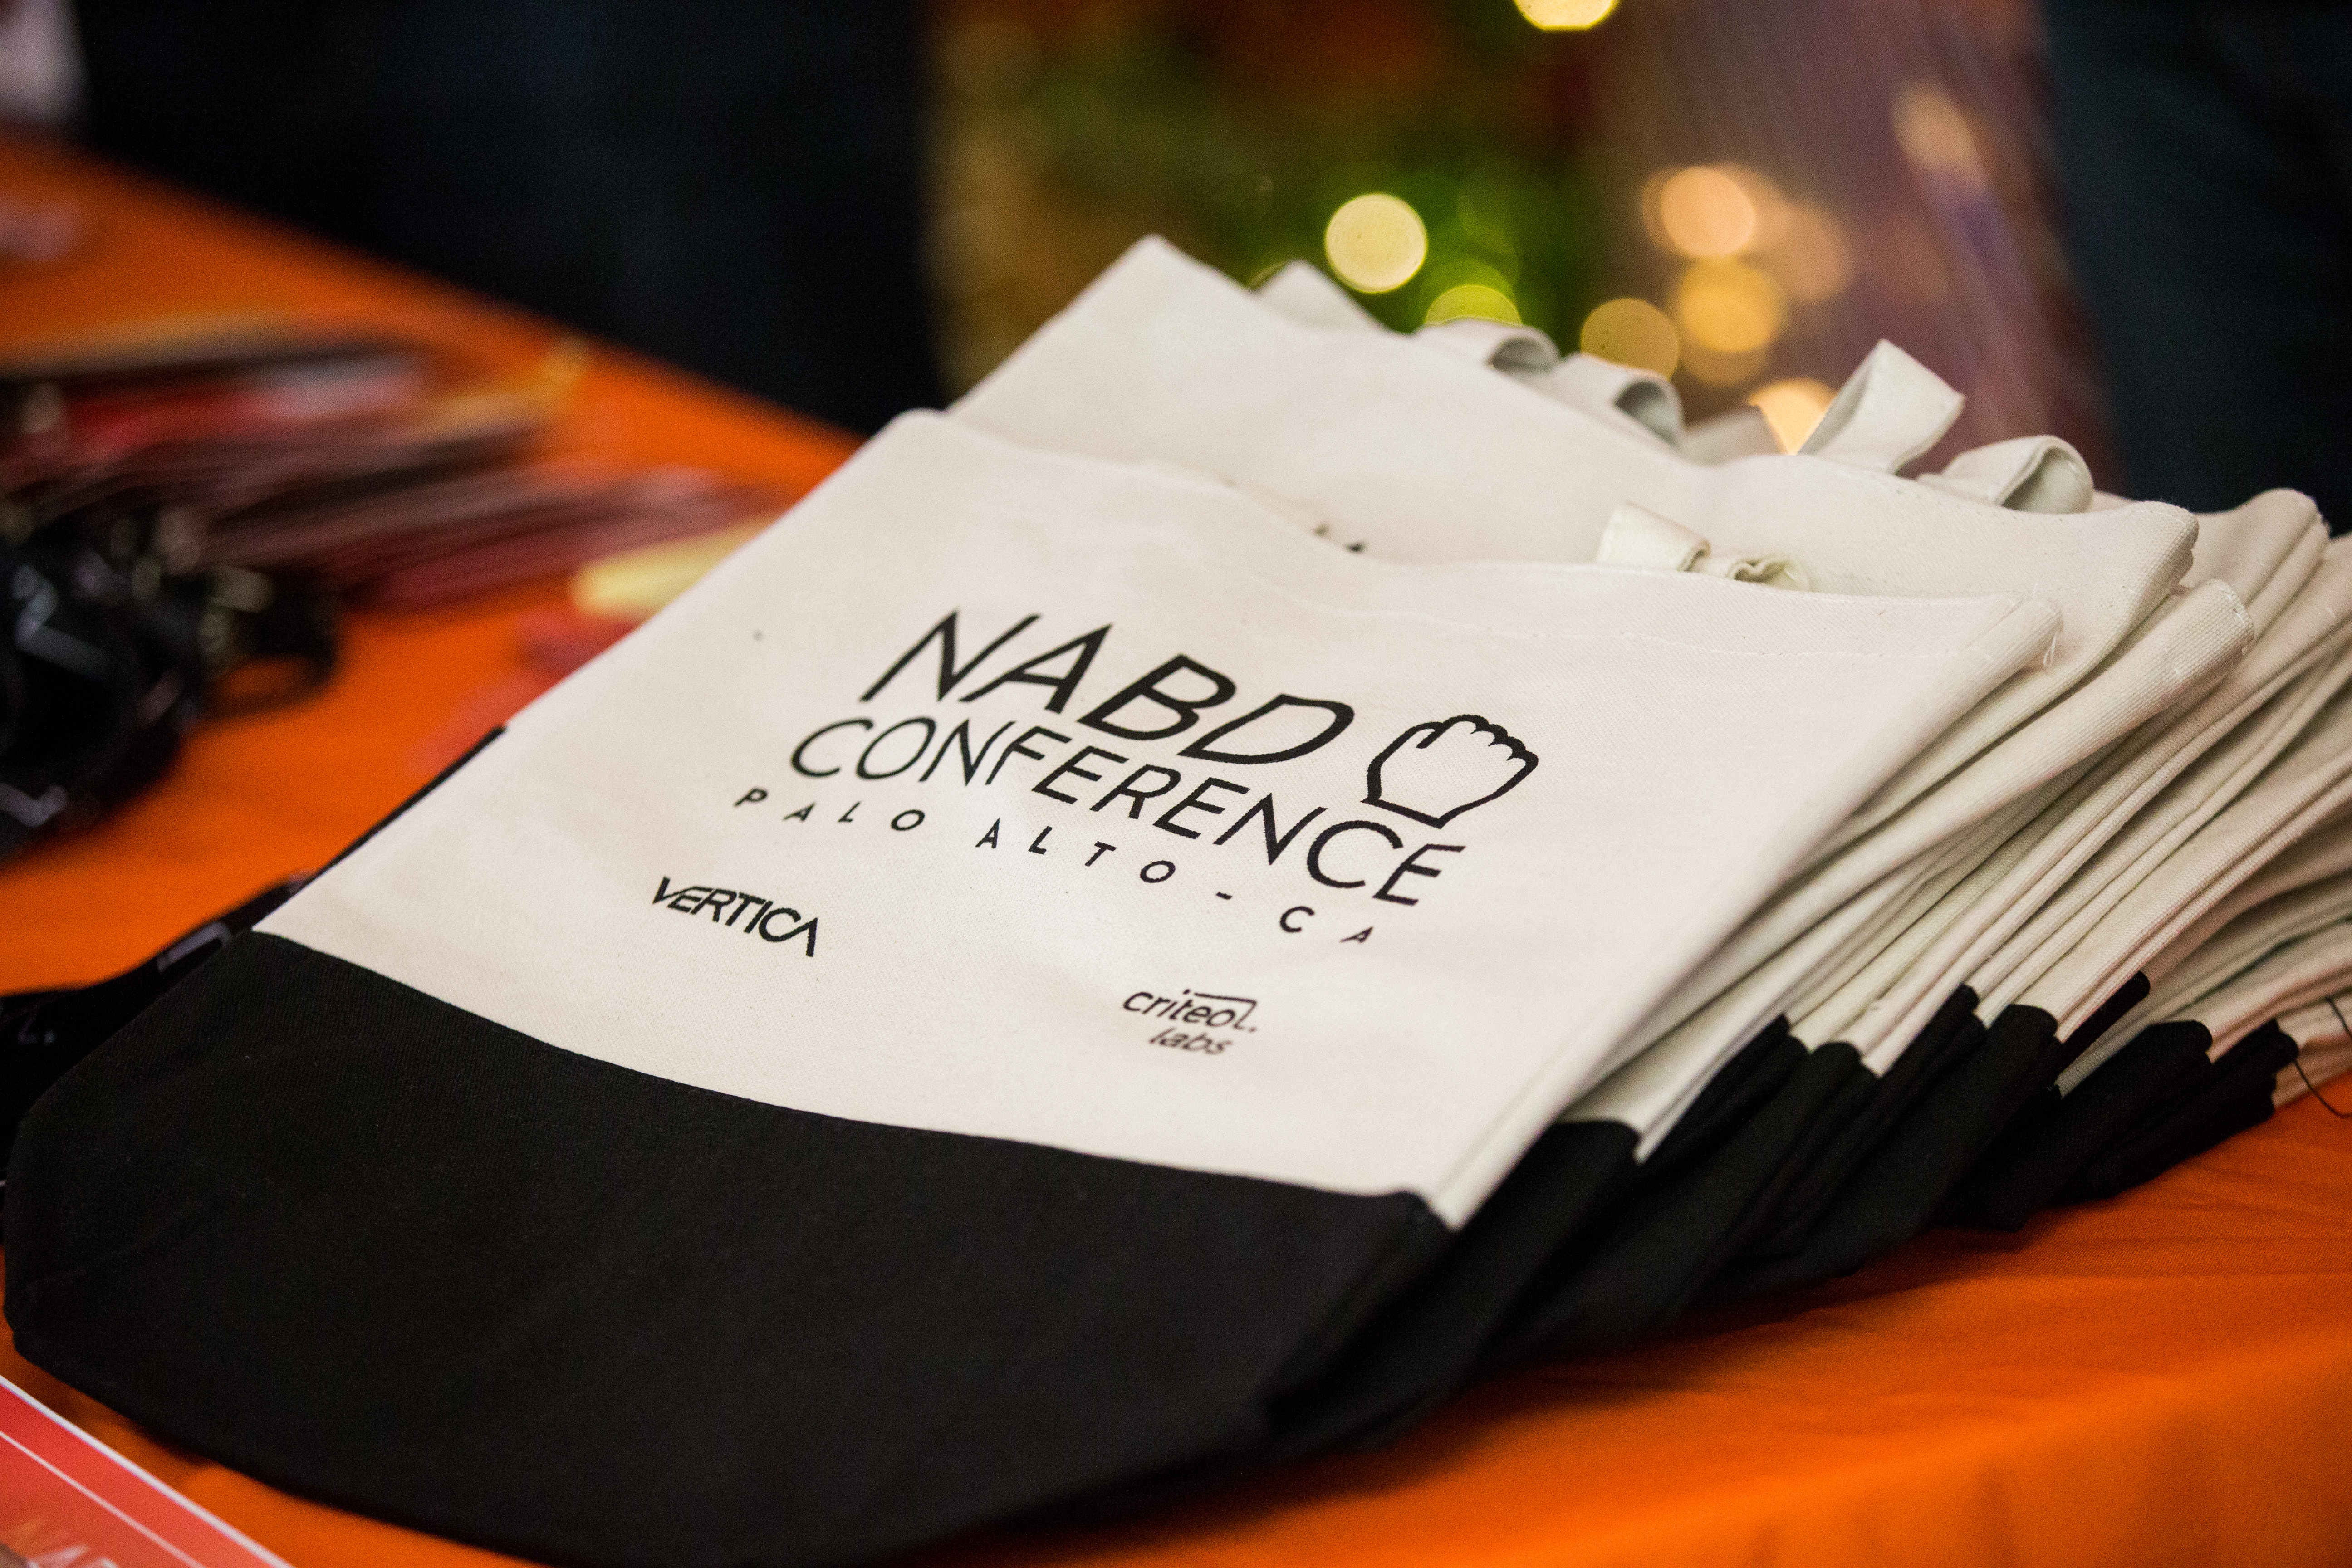 NABDConf Palo Alto: videos from the inaugural event are ready!